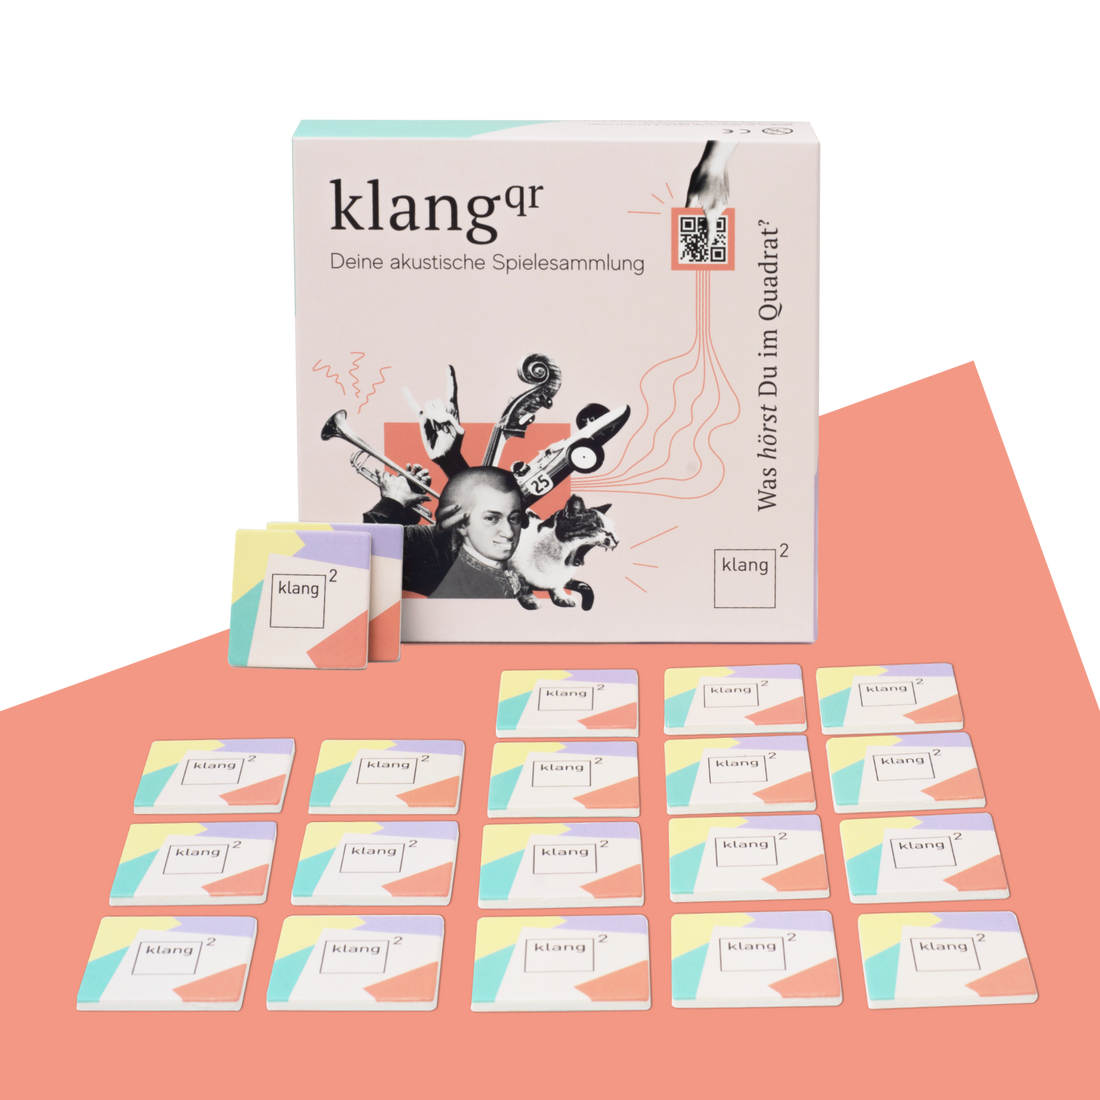 Neues Produkt: klang2 Qr Edition für Tablets (und Smartphones)